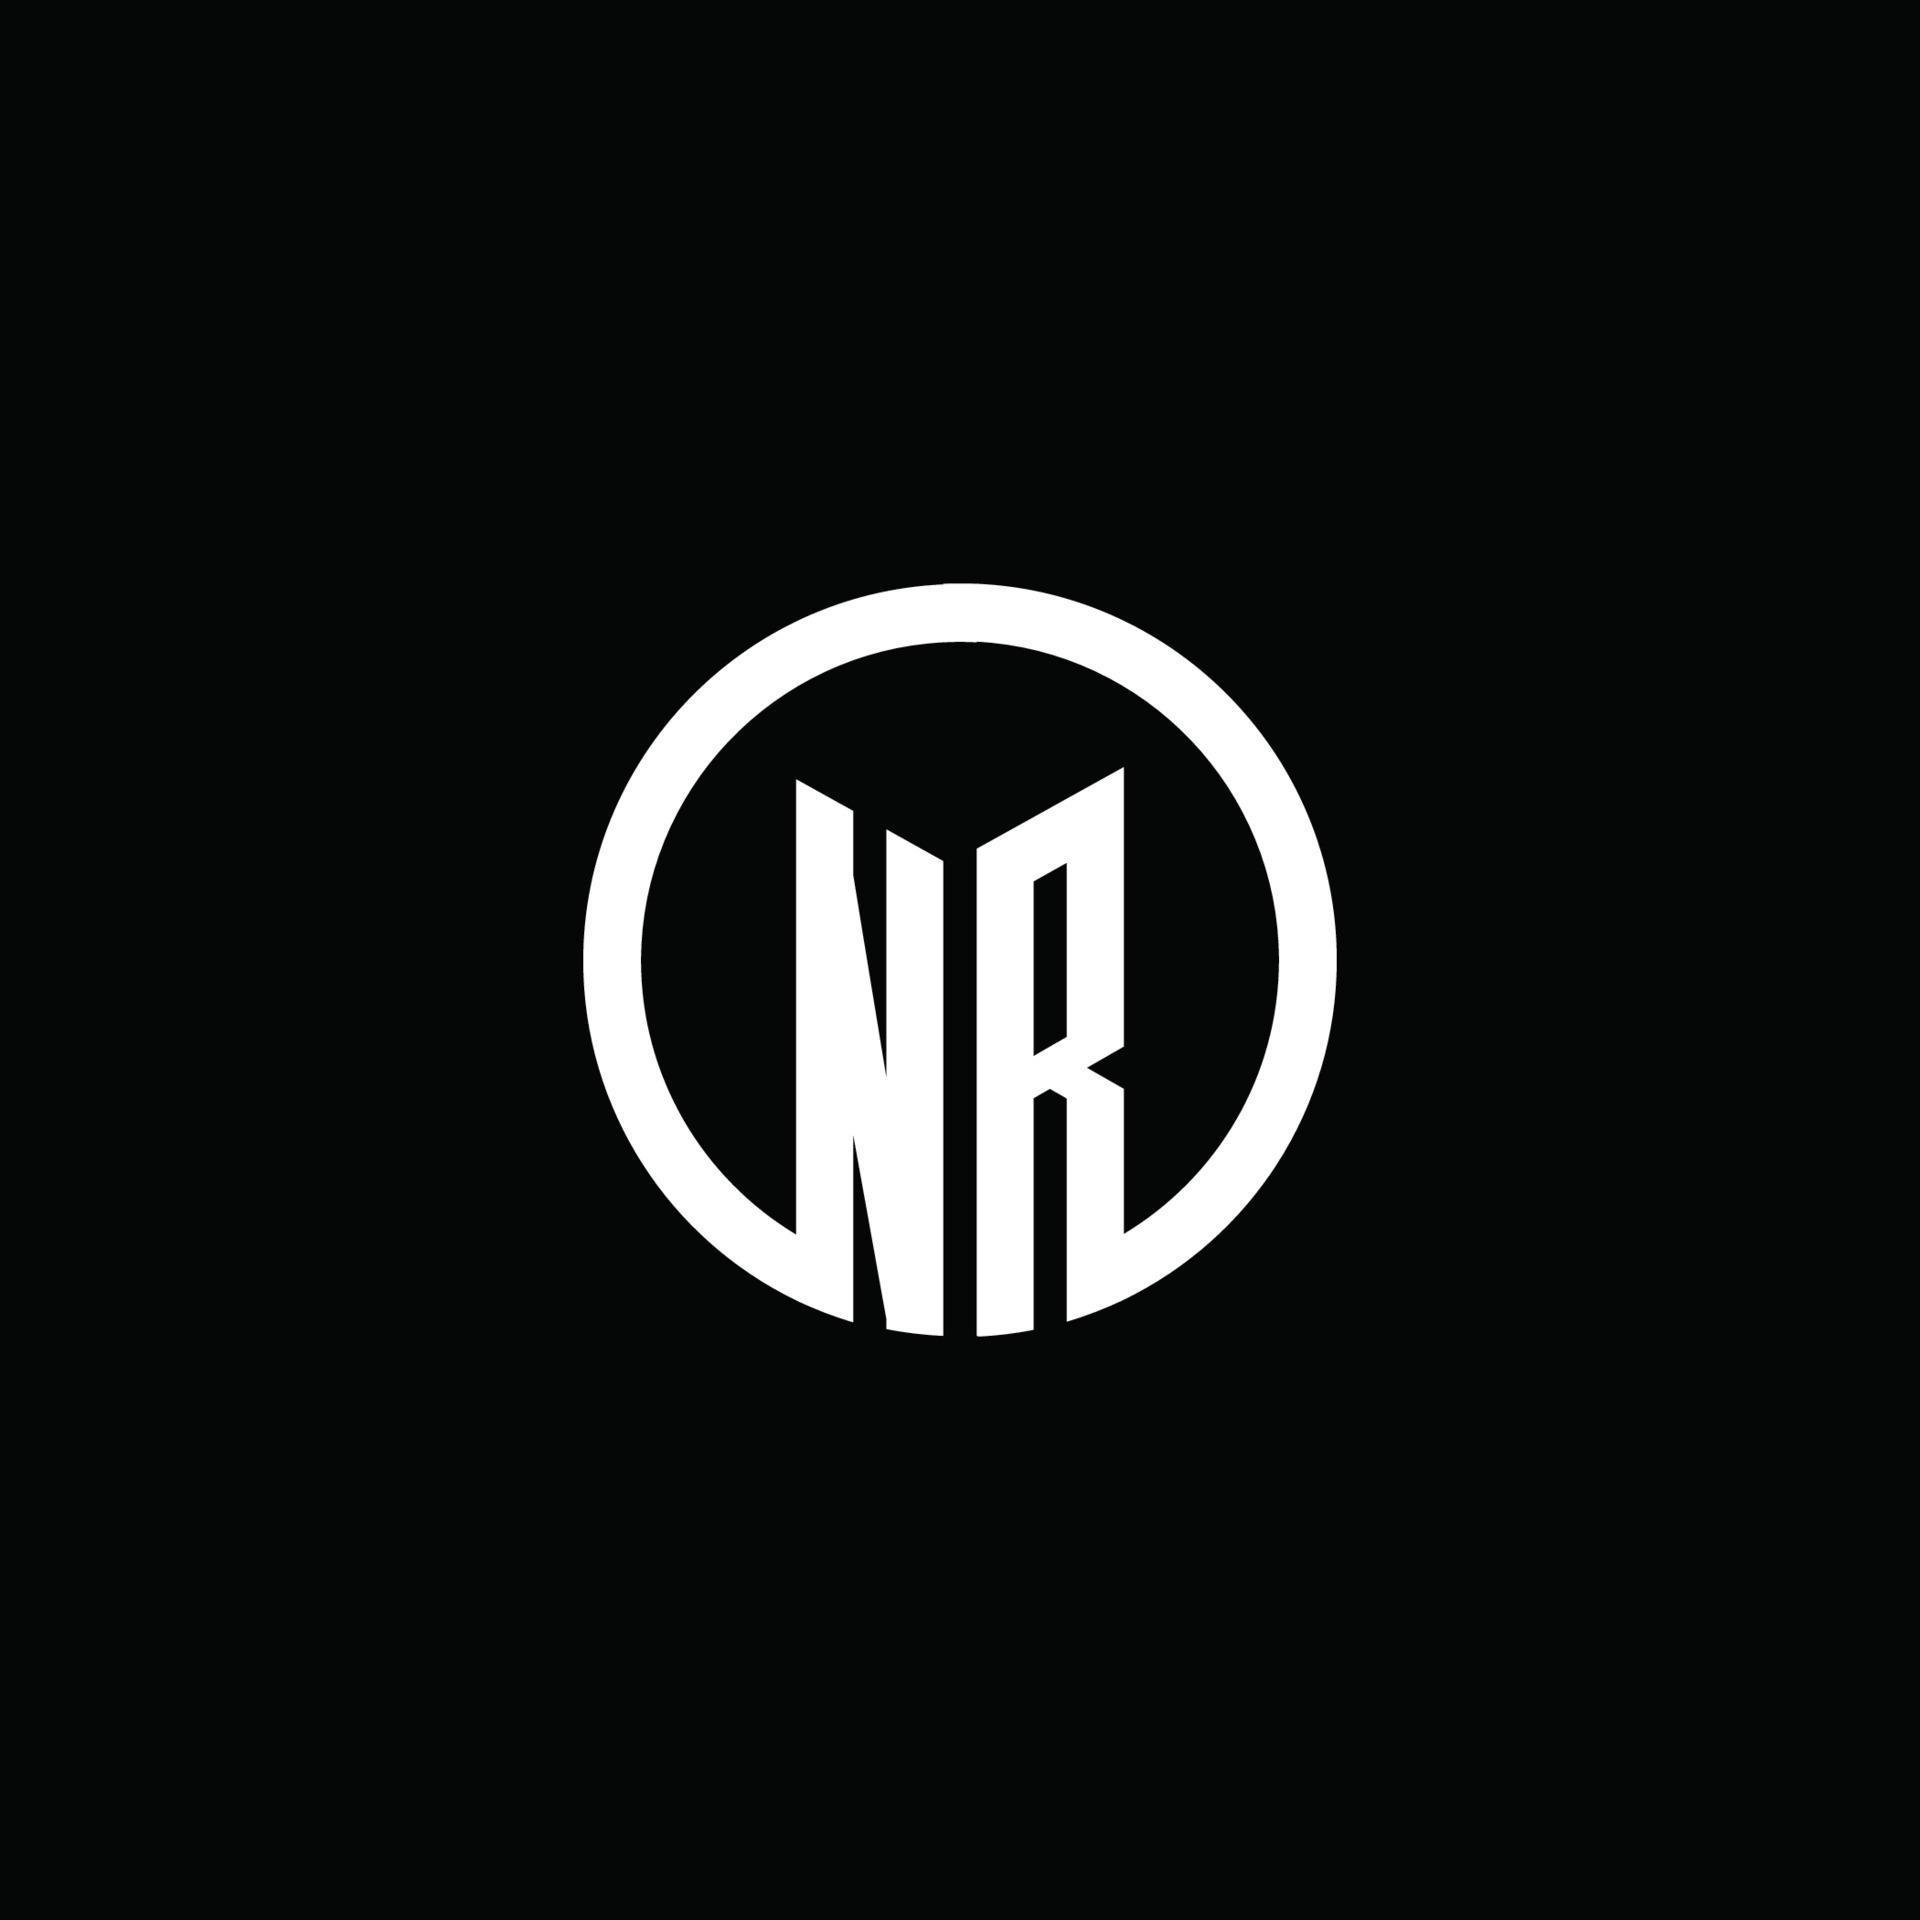 NR monogram logo isolated with a rotating circle 4282733 Vector Art at ...